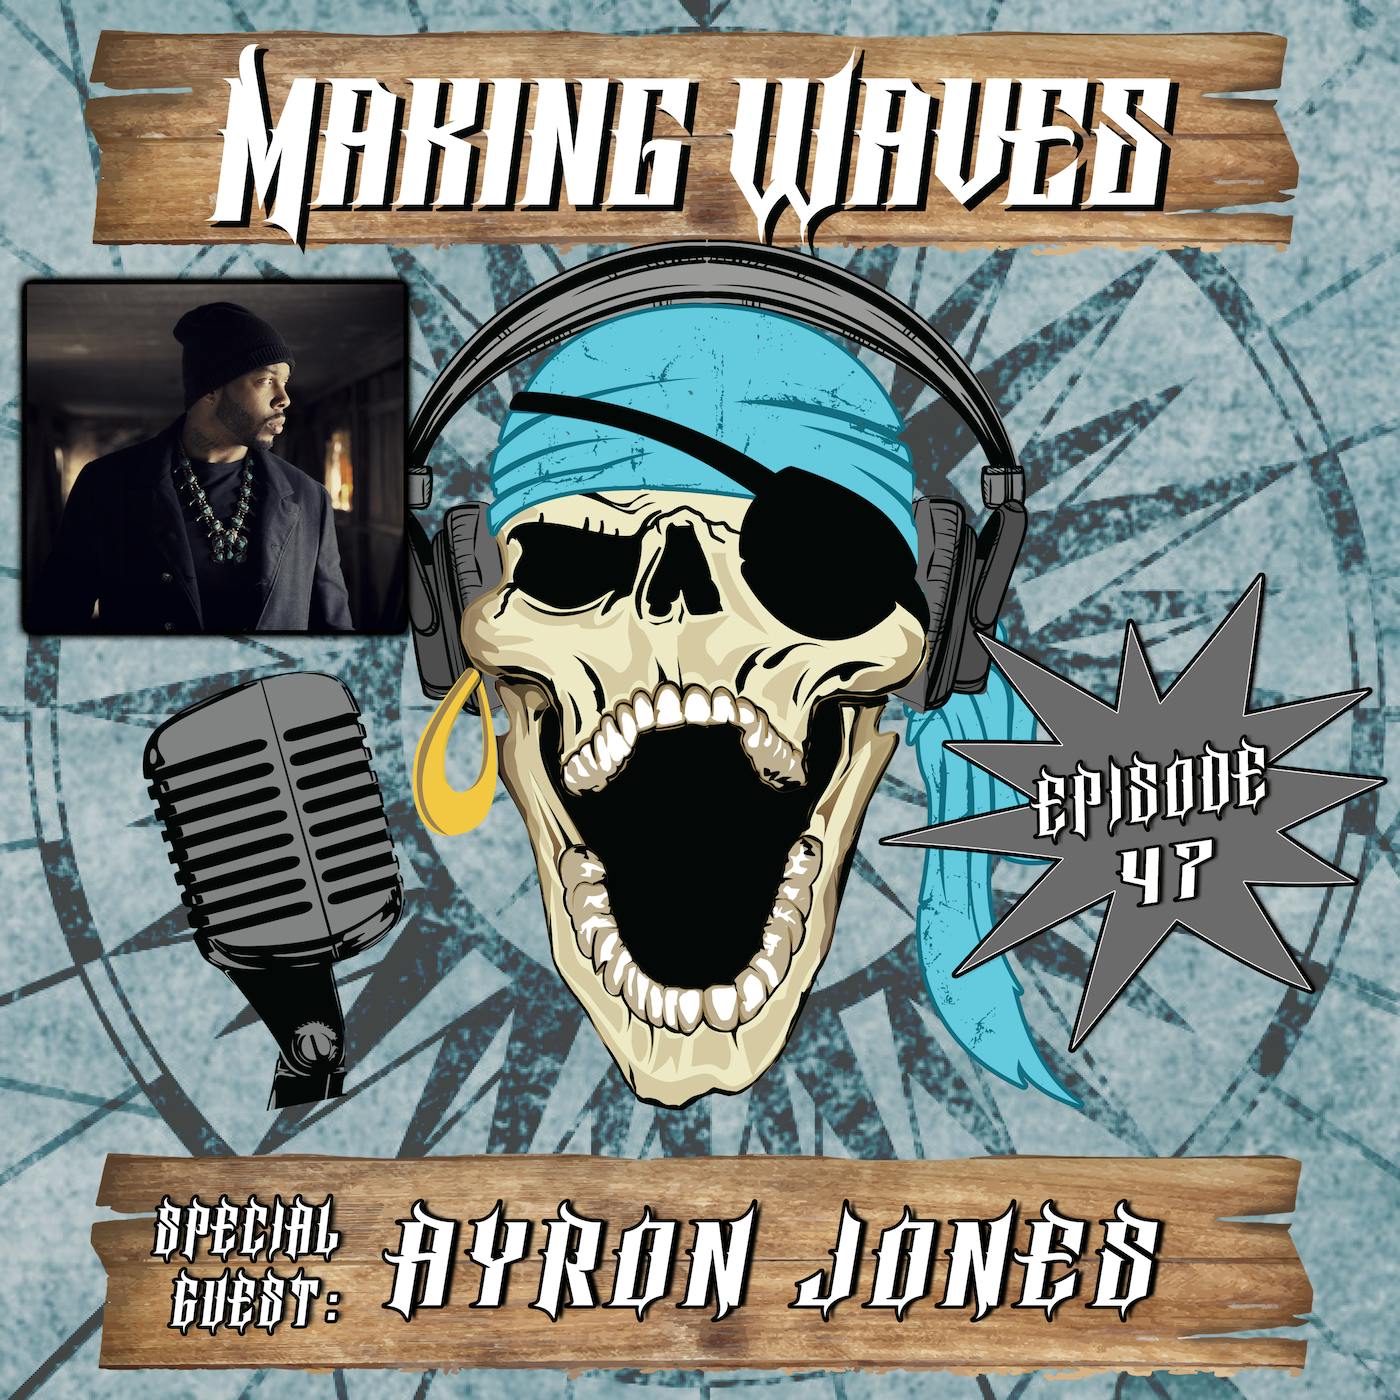 Ep. 47 Making Waves with Ayron Jones!